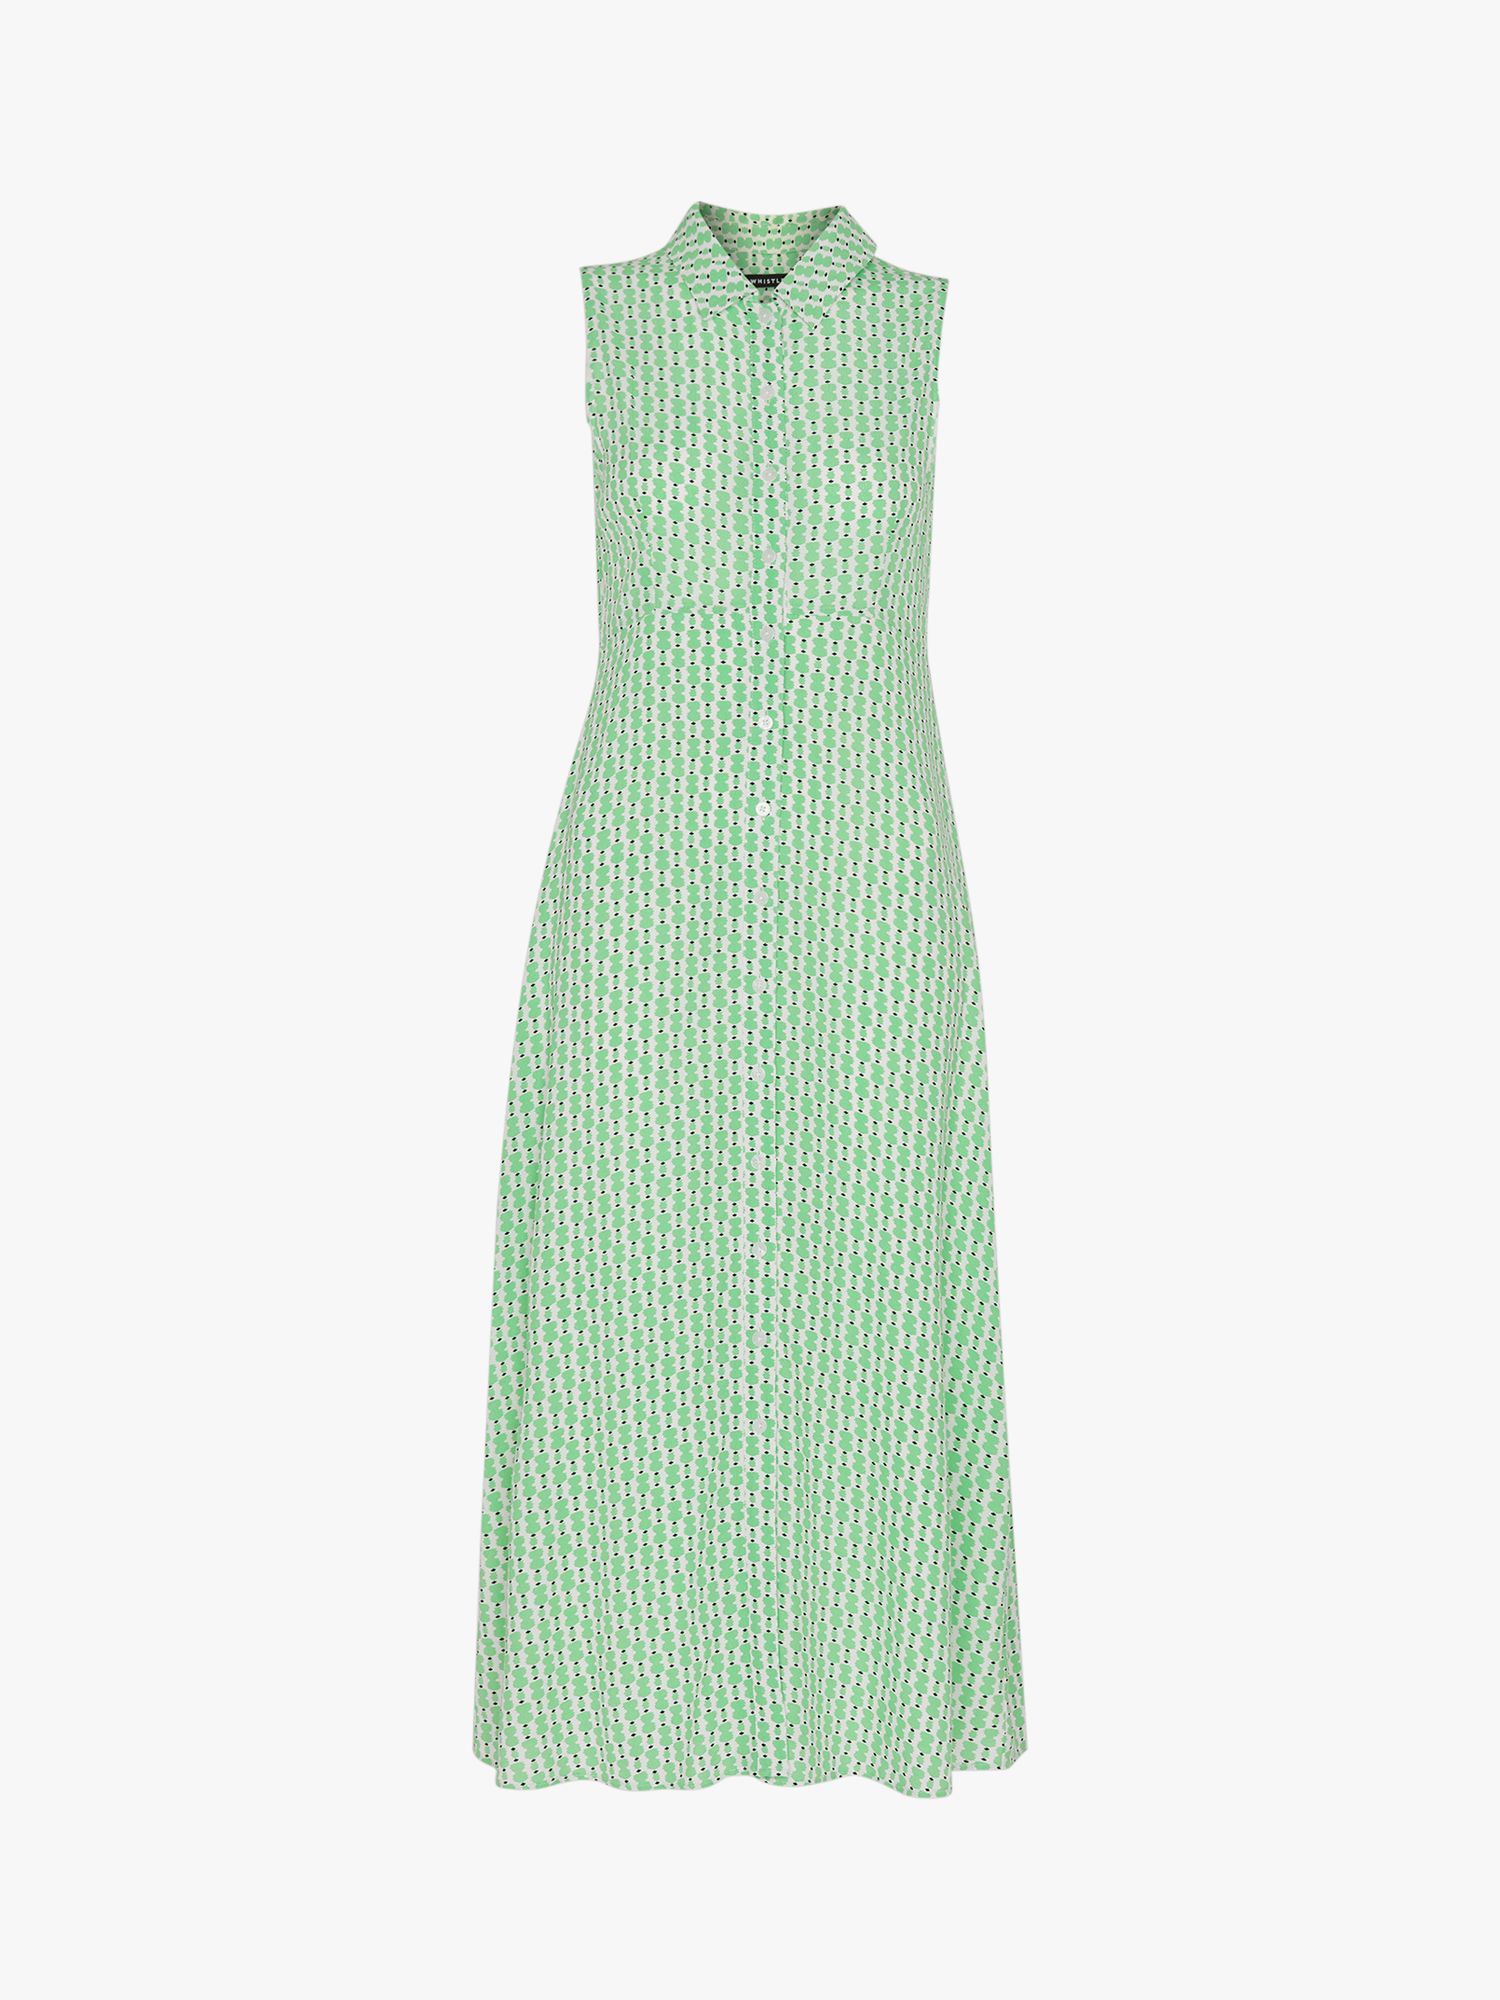 Whistles Vertical Stack Shirt Dress, Green/Multi at John Lewis & Partners